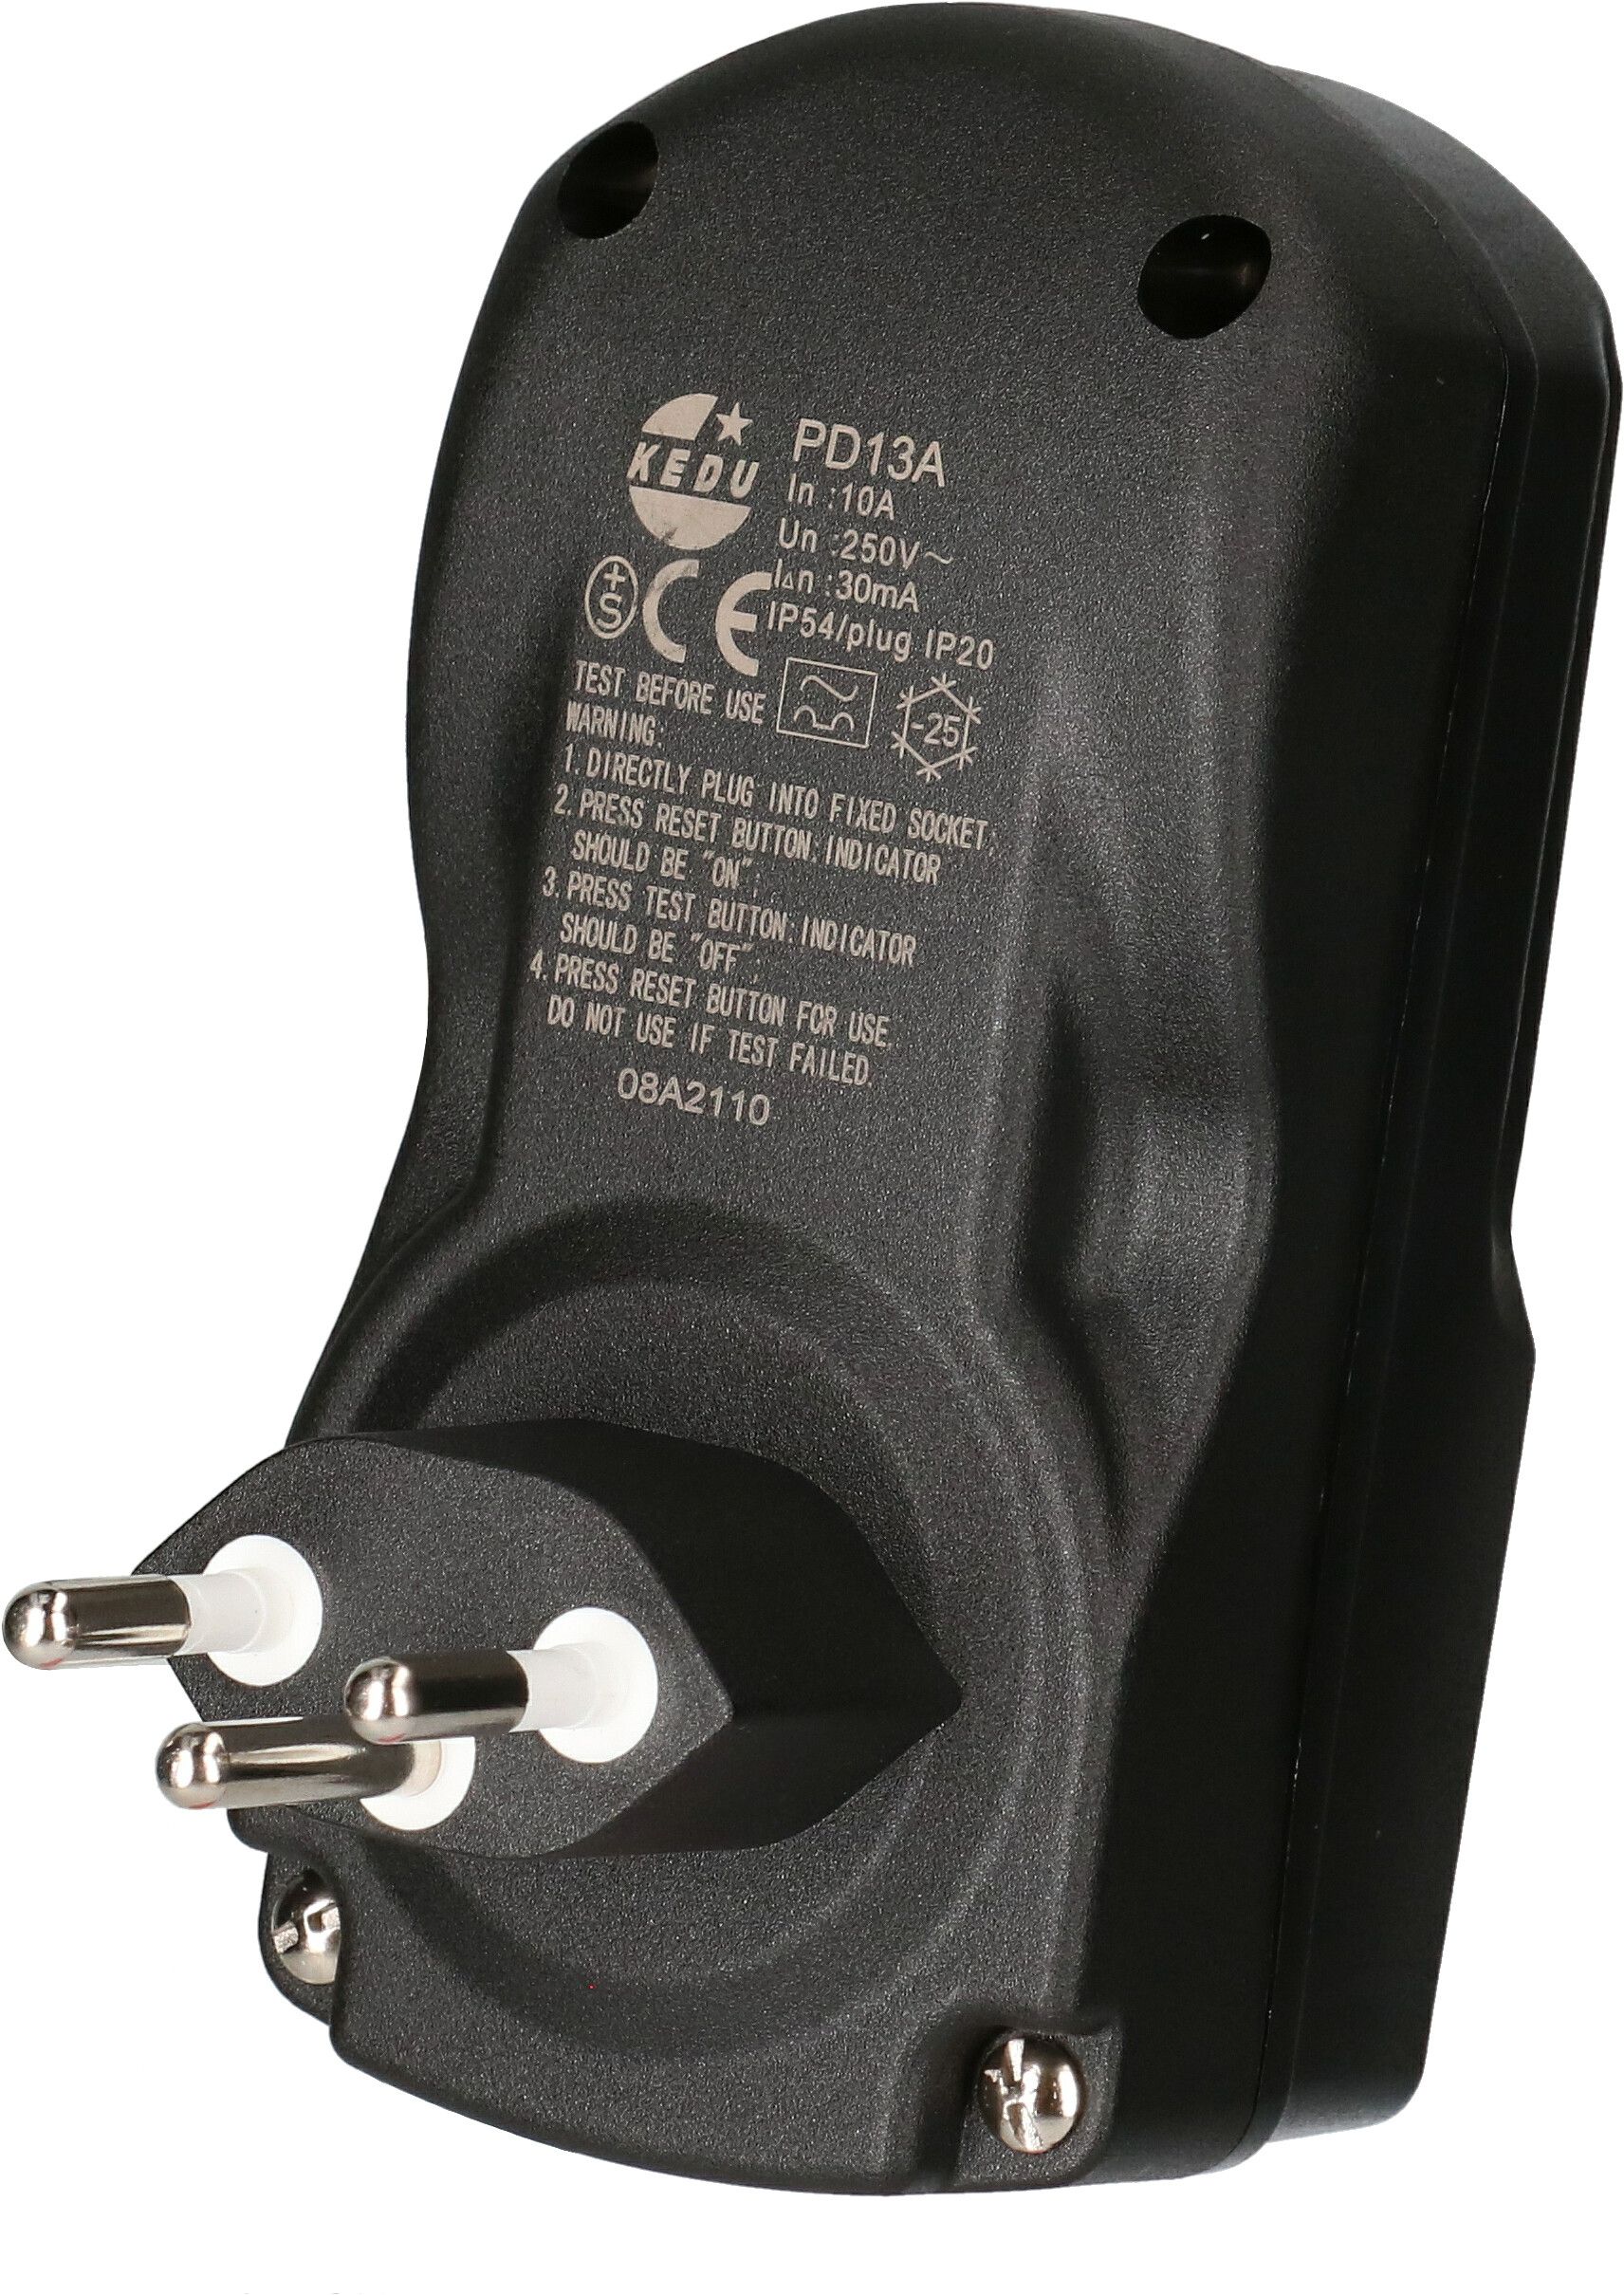 RCD-adaptor with residual circuit device